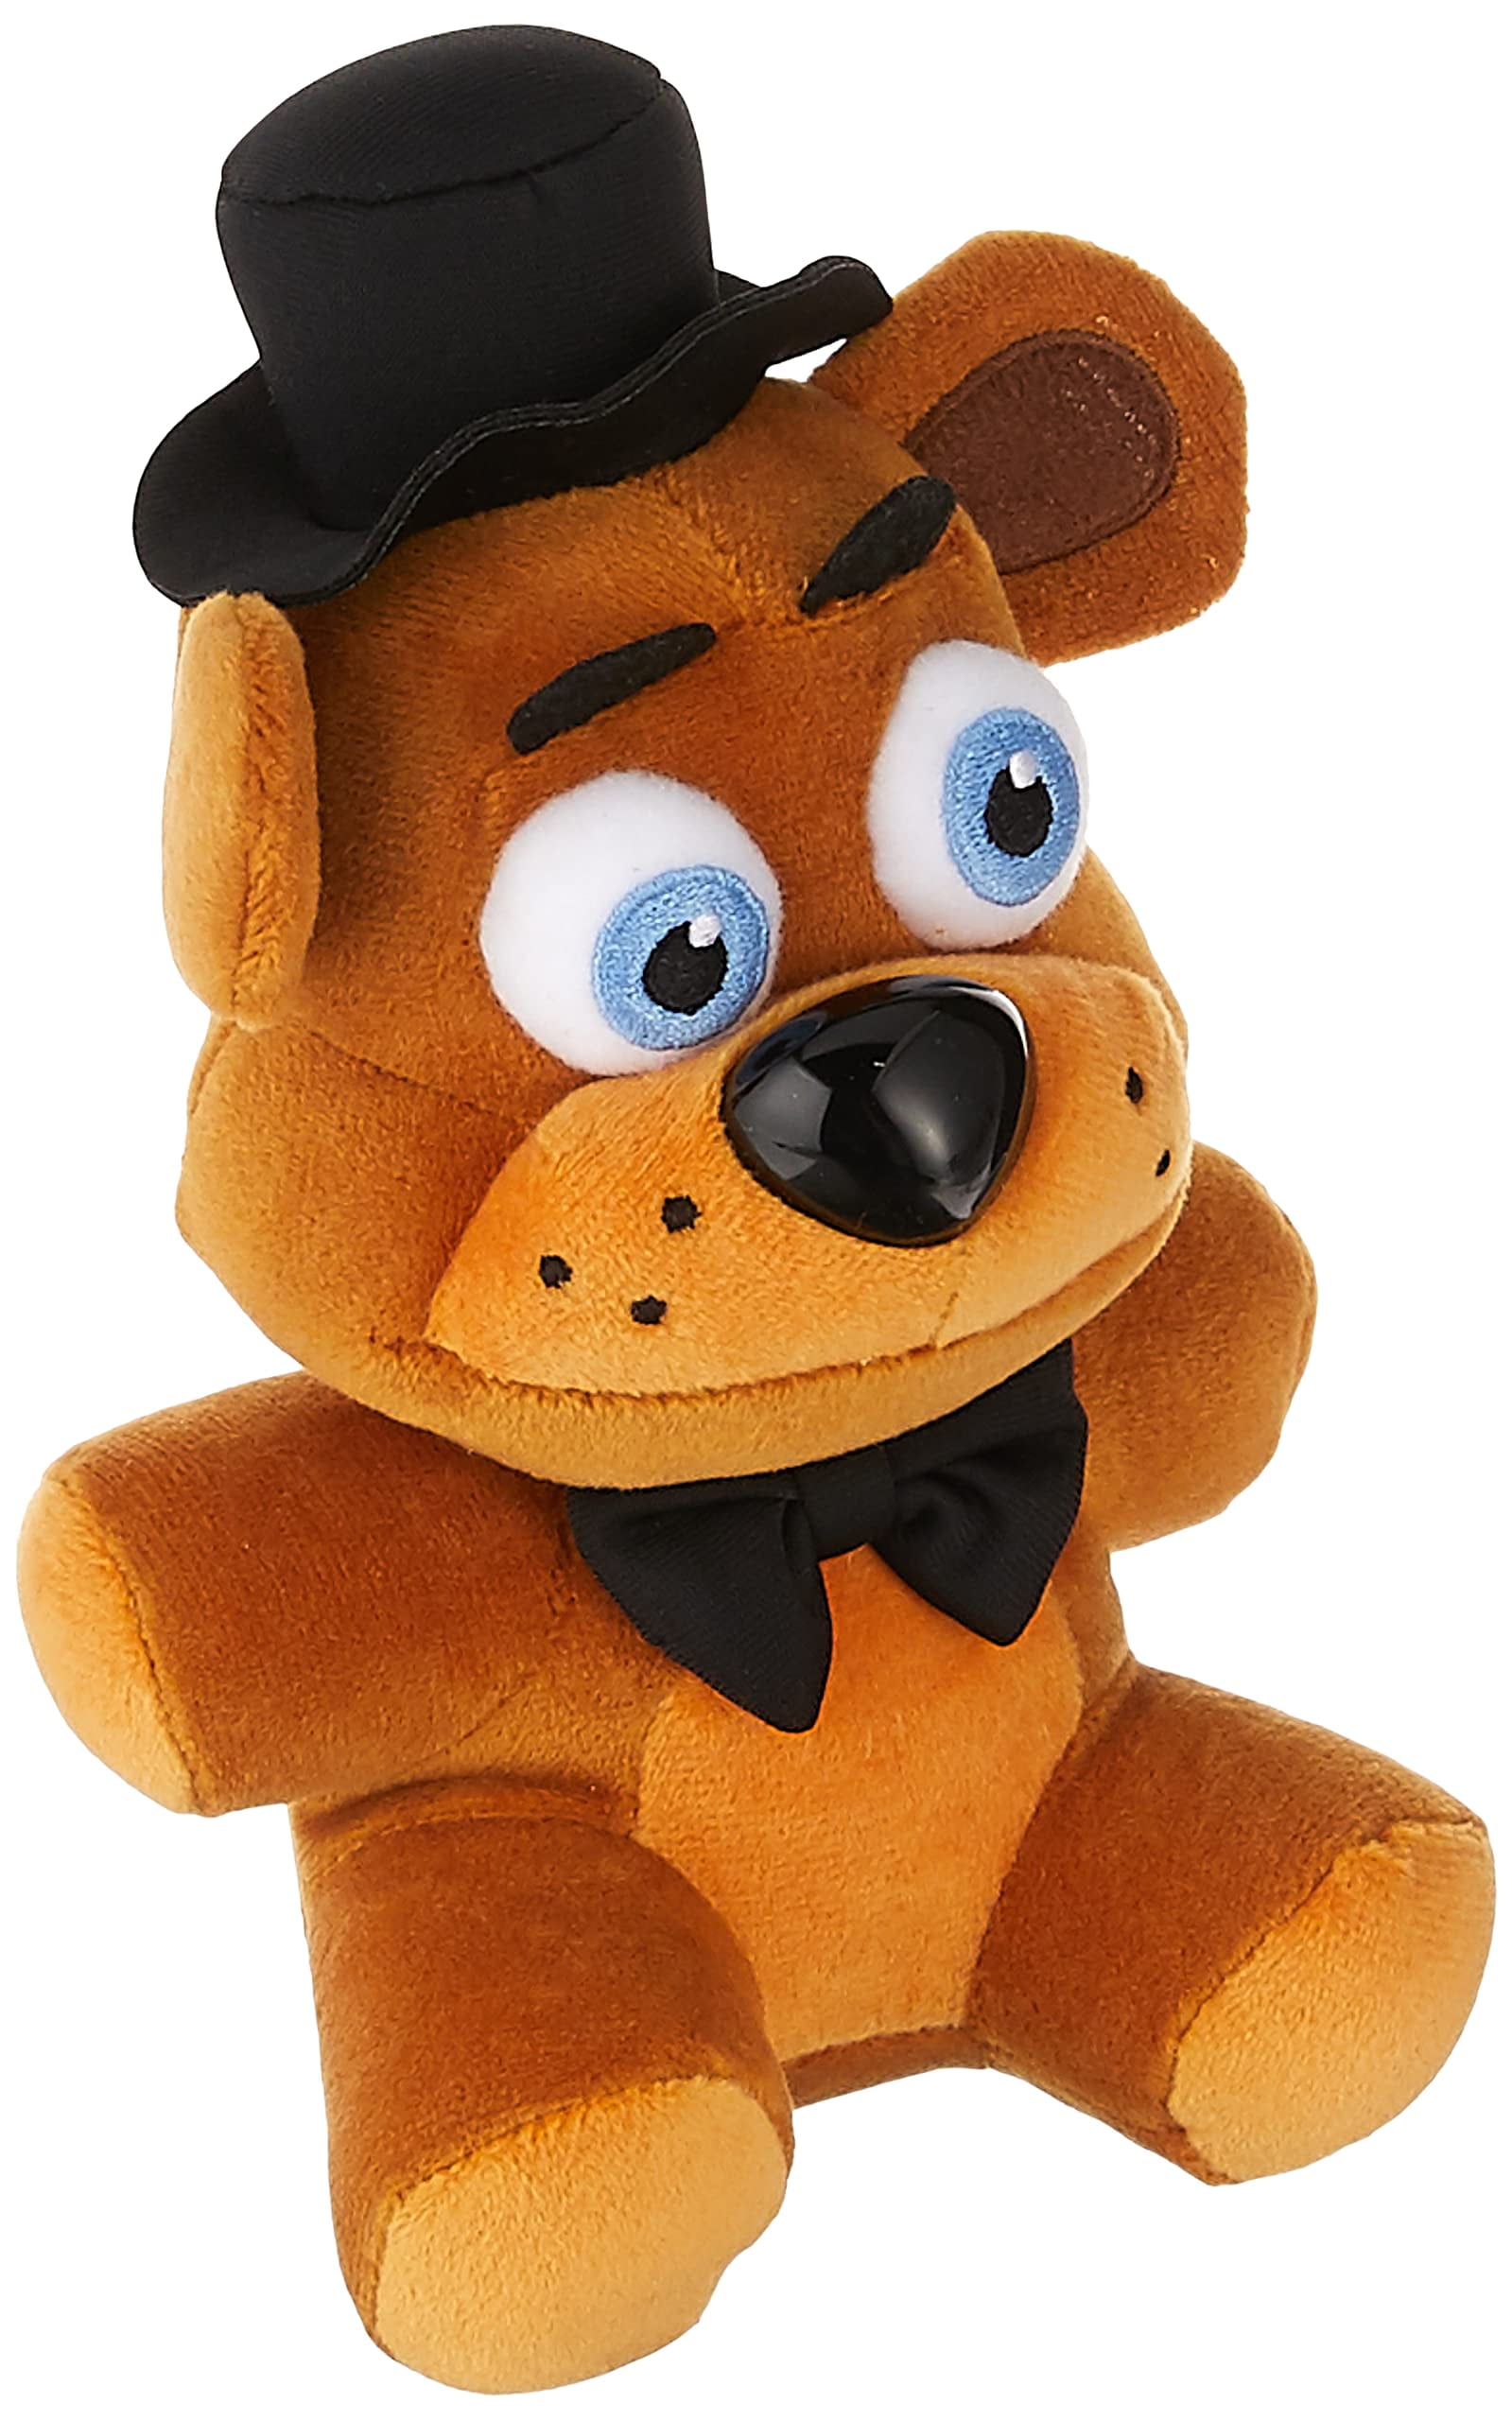 FNAF Movie Series Stuffed Plush Doll Brown Bear Freddy Microphone Freddy  Pirate Wolf Plush Toy Christmas Gift for Children